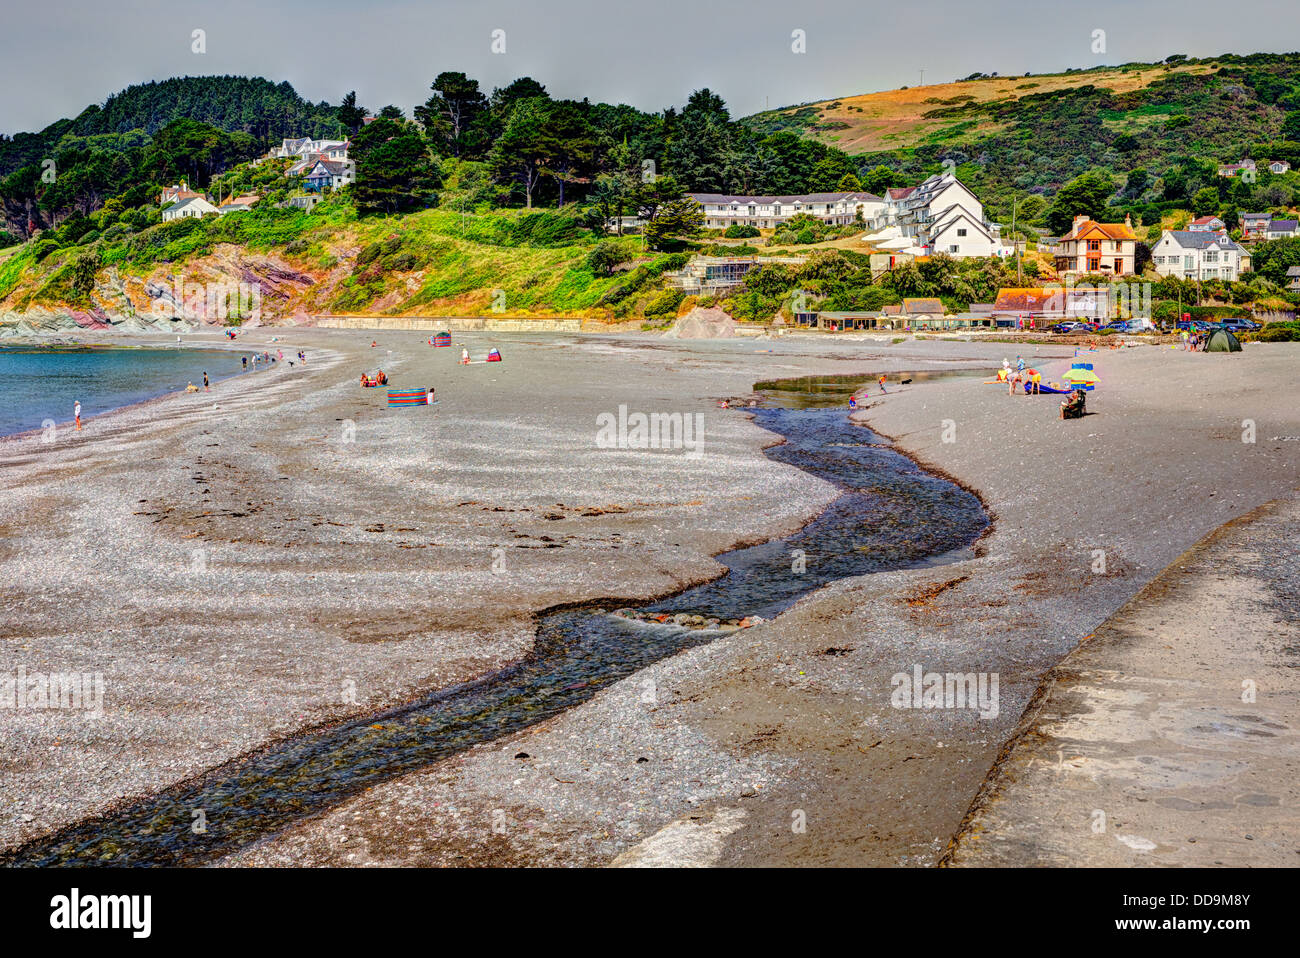 Seaton beach Cornwall England UK HDR image with vivid colour Stock Photo